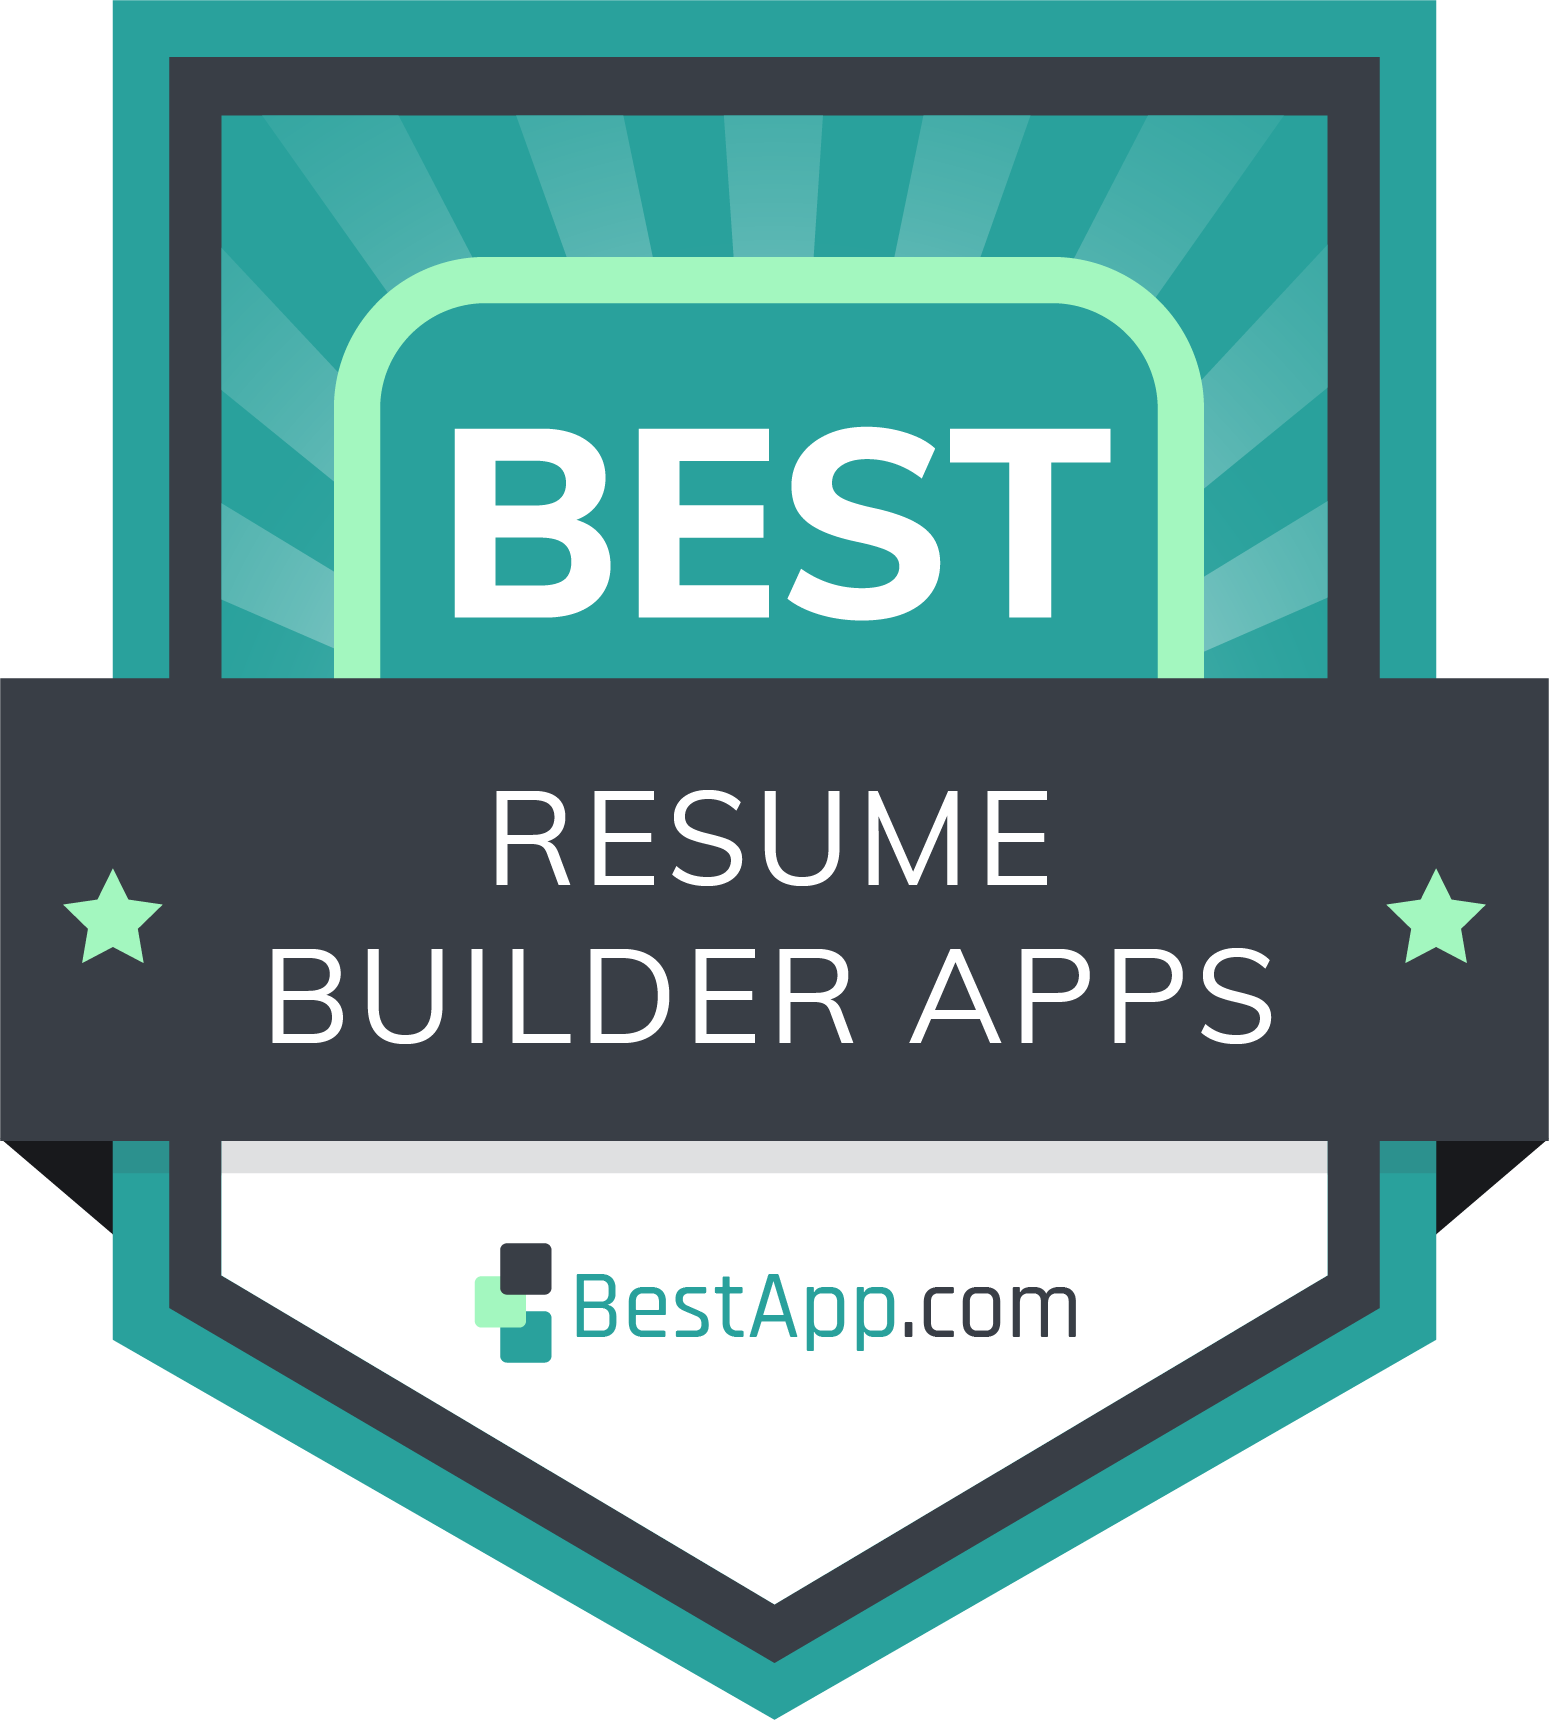 Best Resume Builder Apps Badge